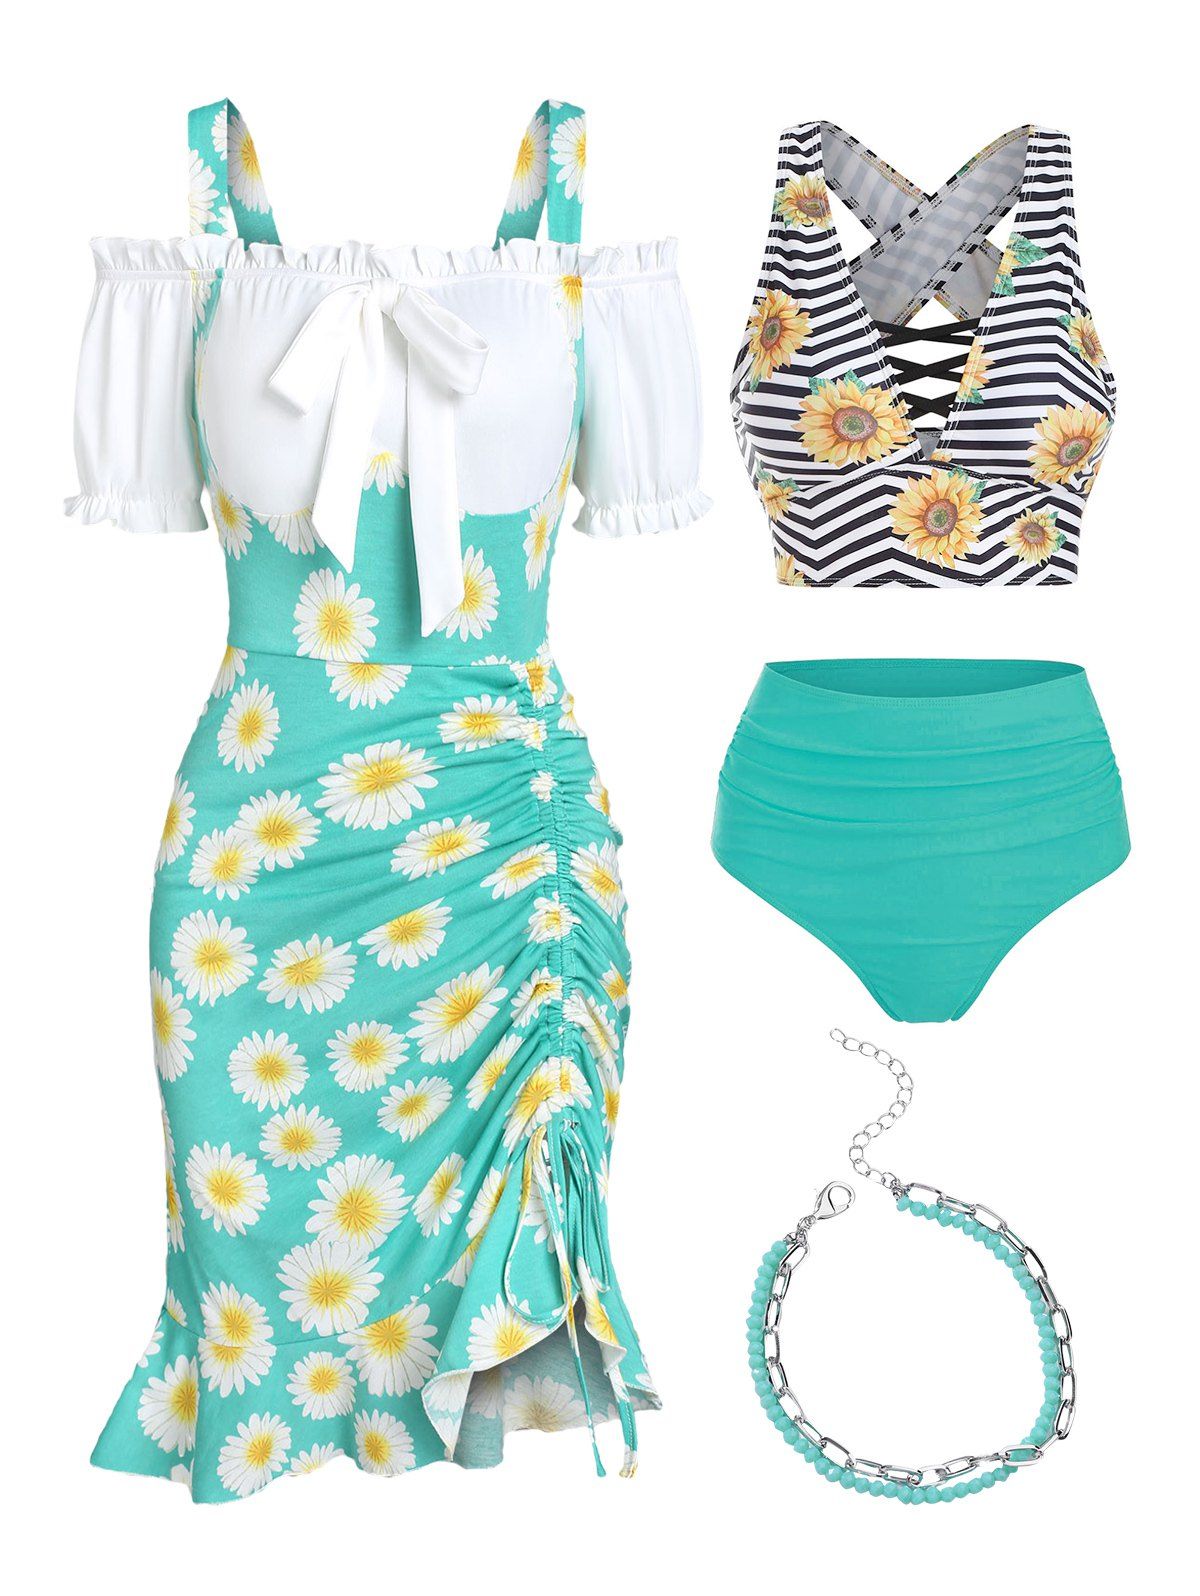 Daisy Print Dress Zig Zag Sunflower Tankini Swimwear 2Pcs Beaded Figaro Chain Anklets Outfit - LIGHT GREEN S